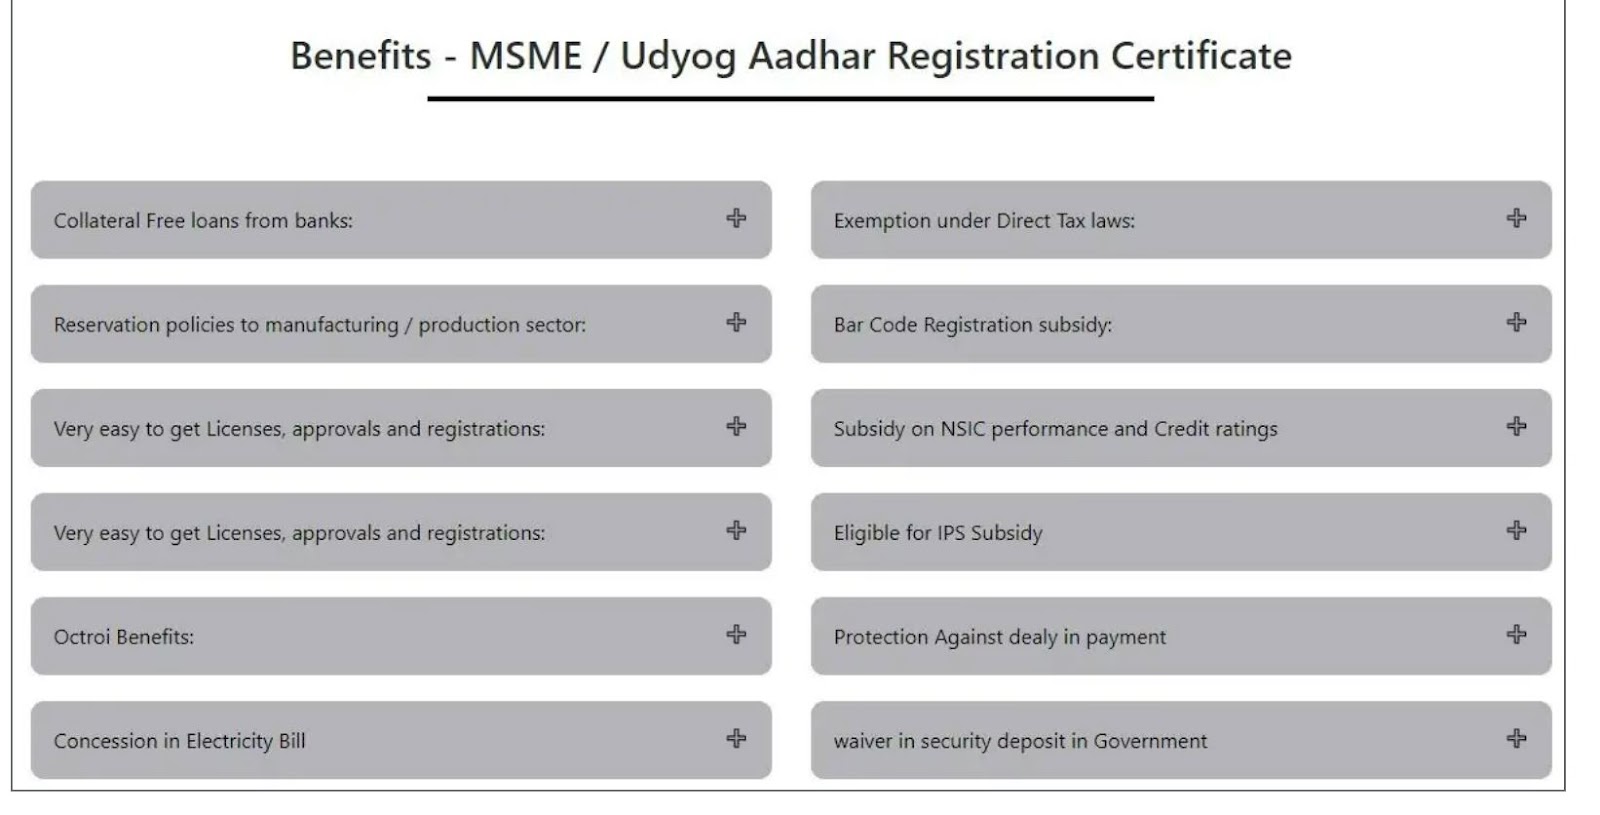 Visit the Official Portal of Udyog Aadhaar